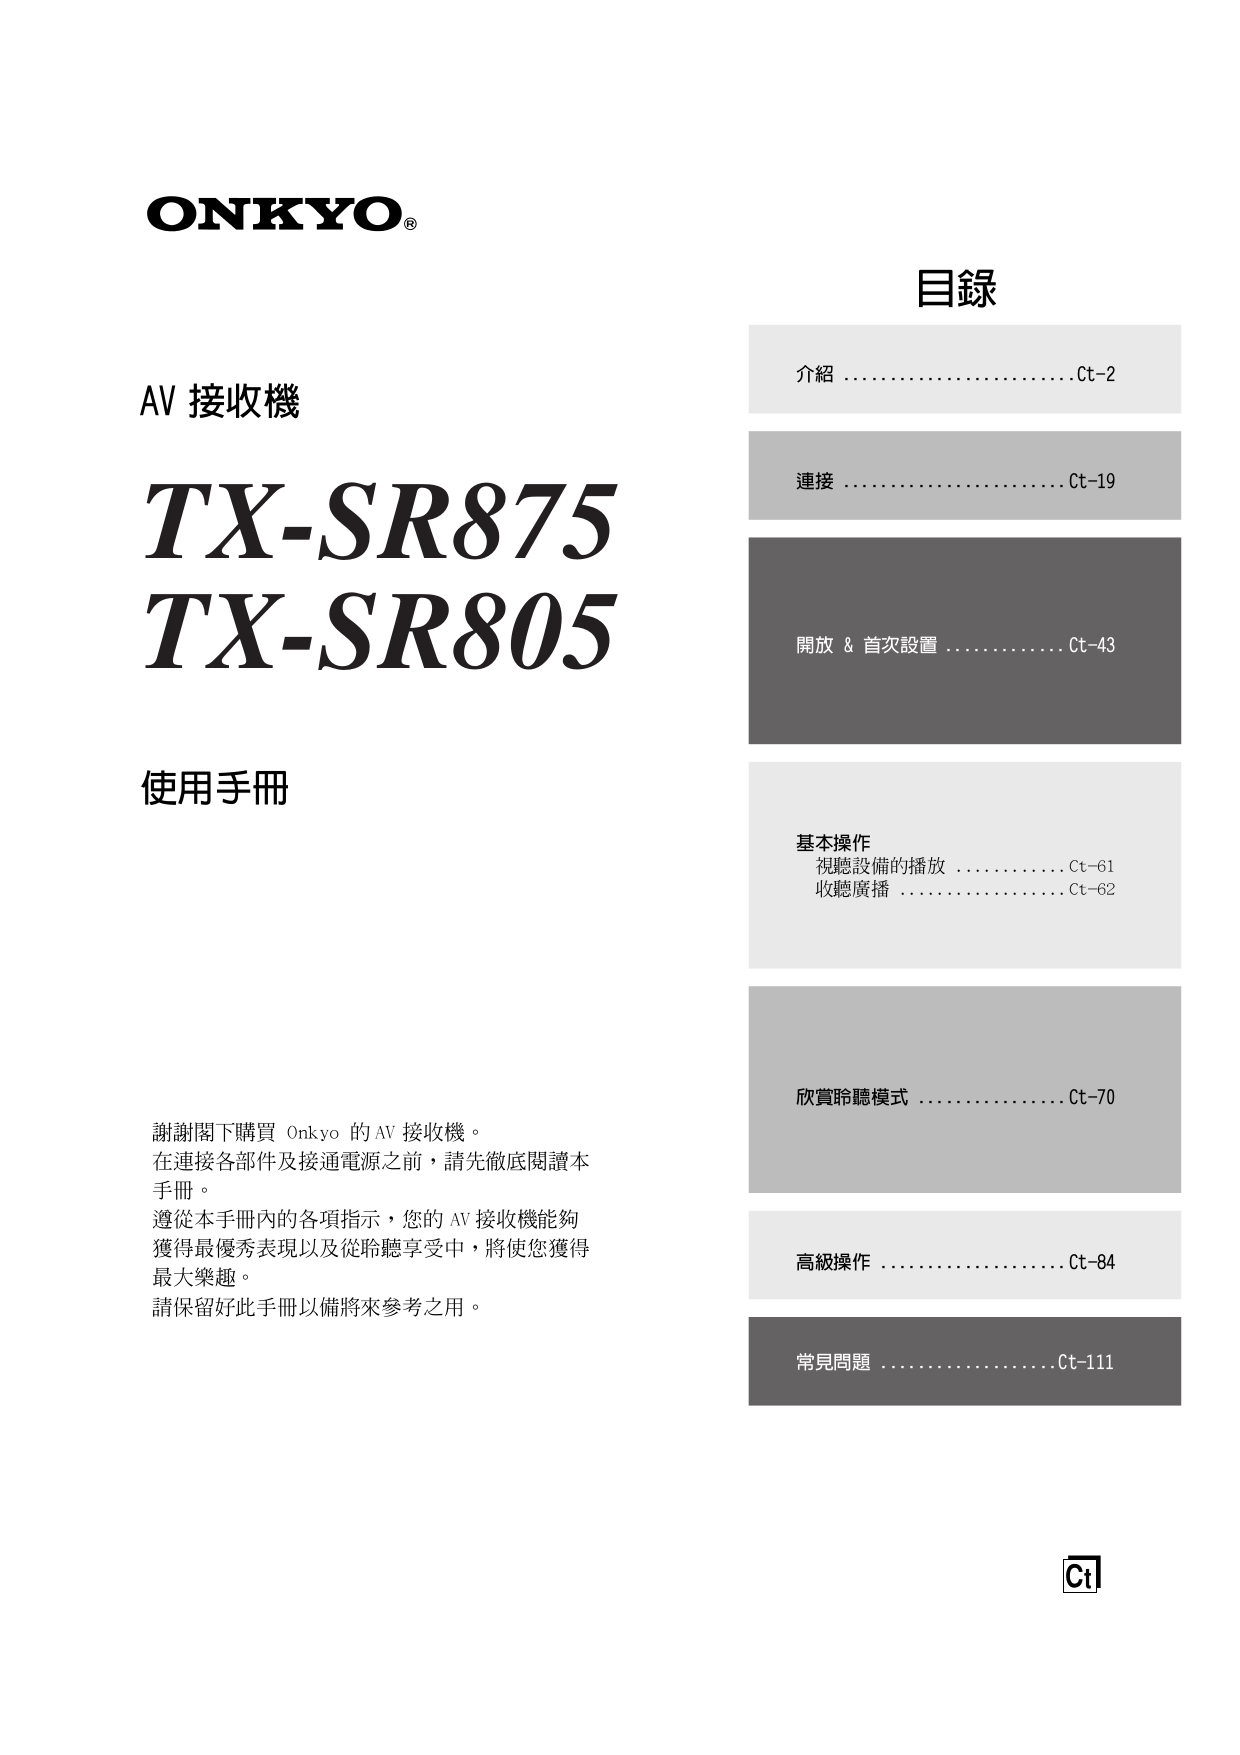 Download free pdf for Onkyo TX-SR805 Receiver manual